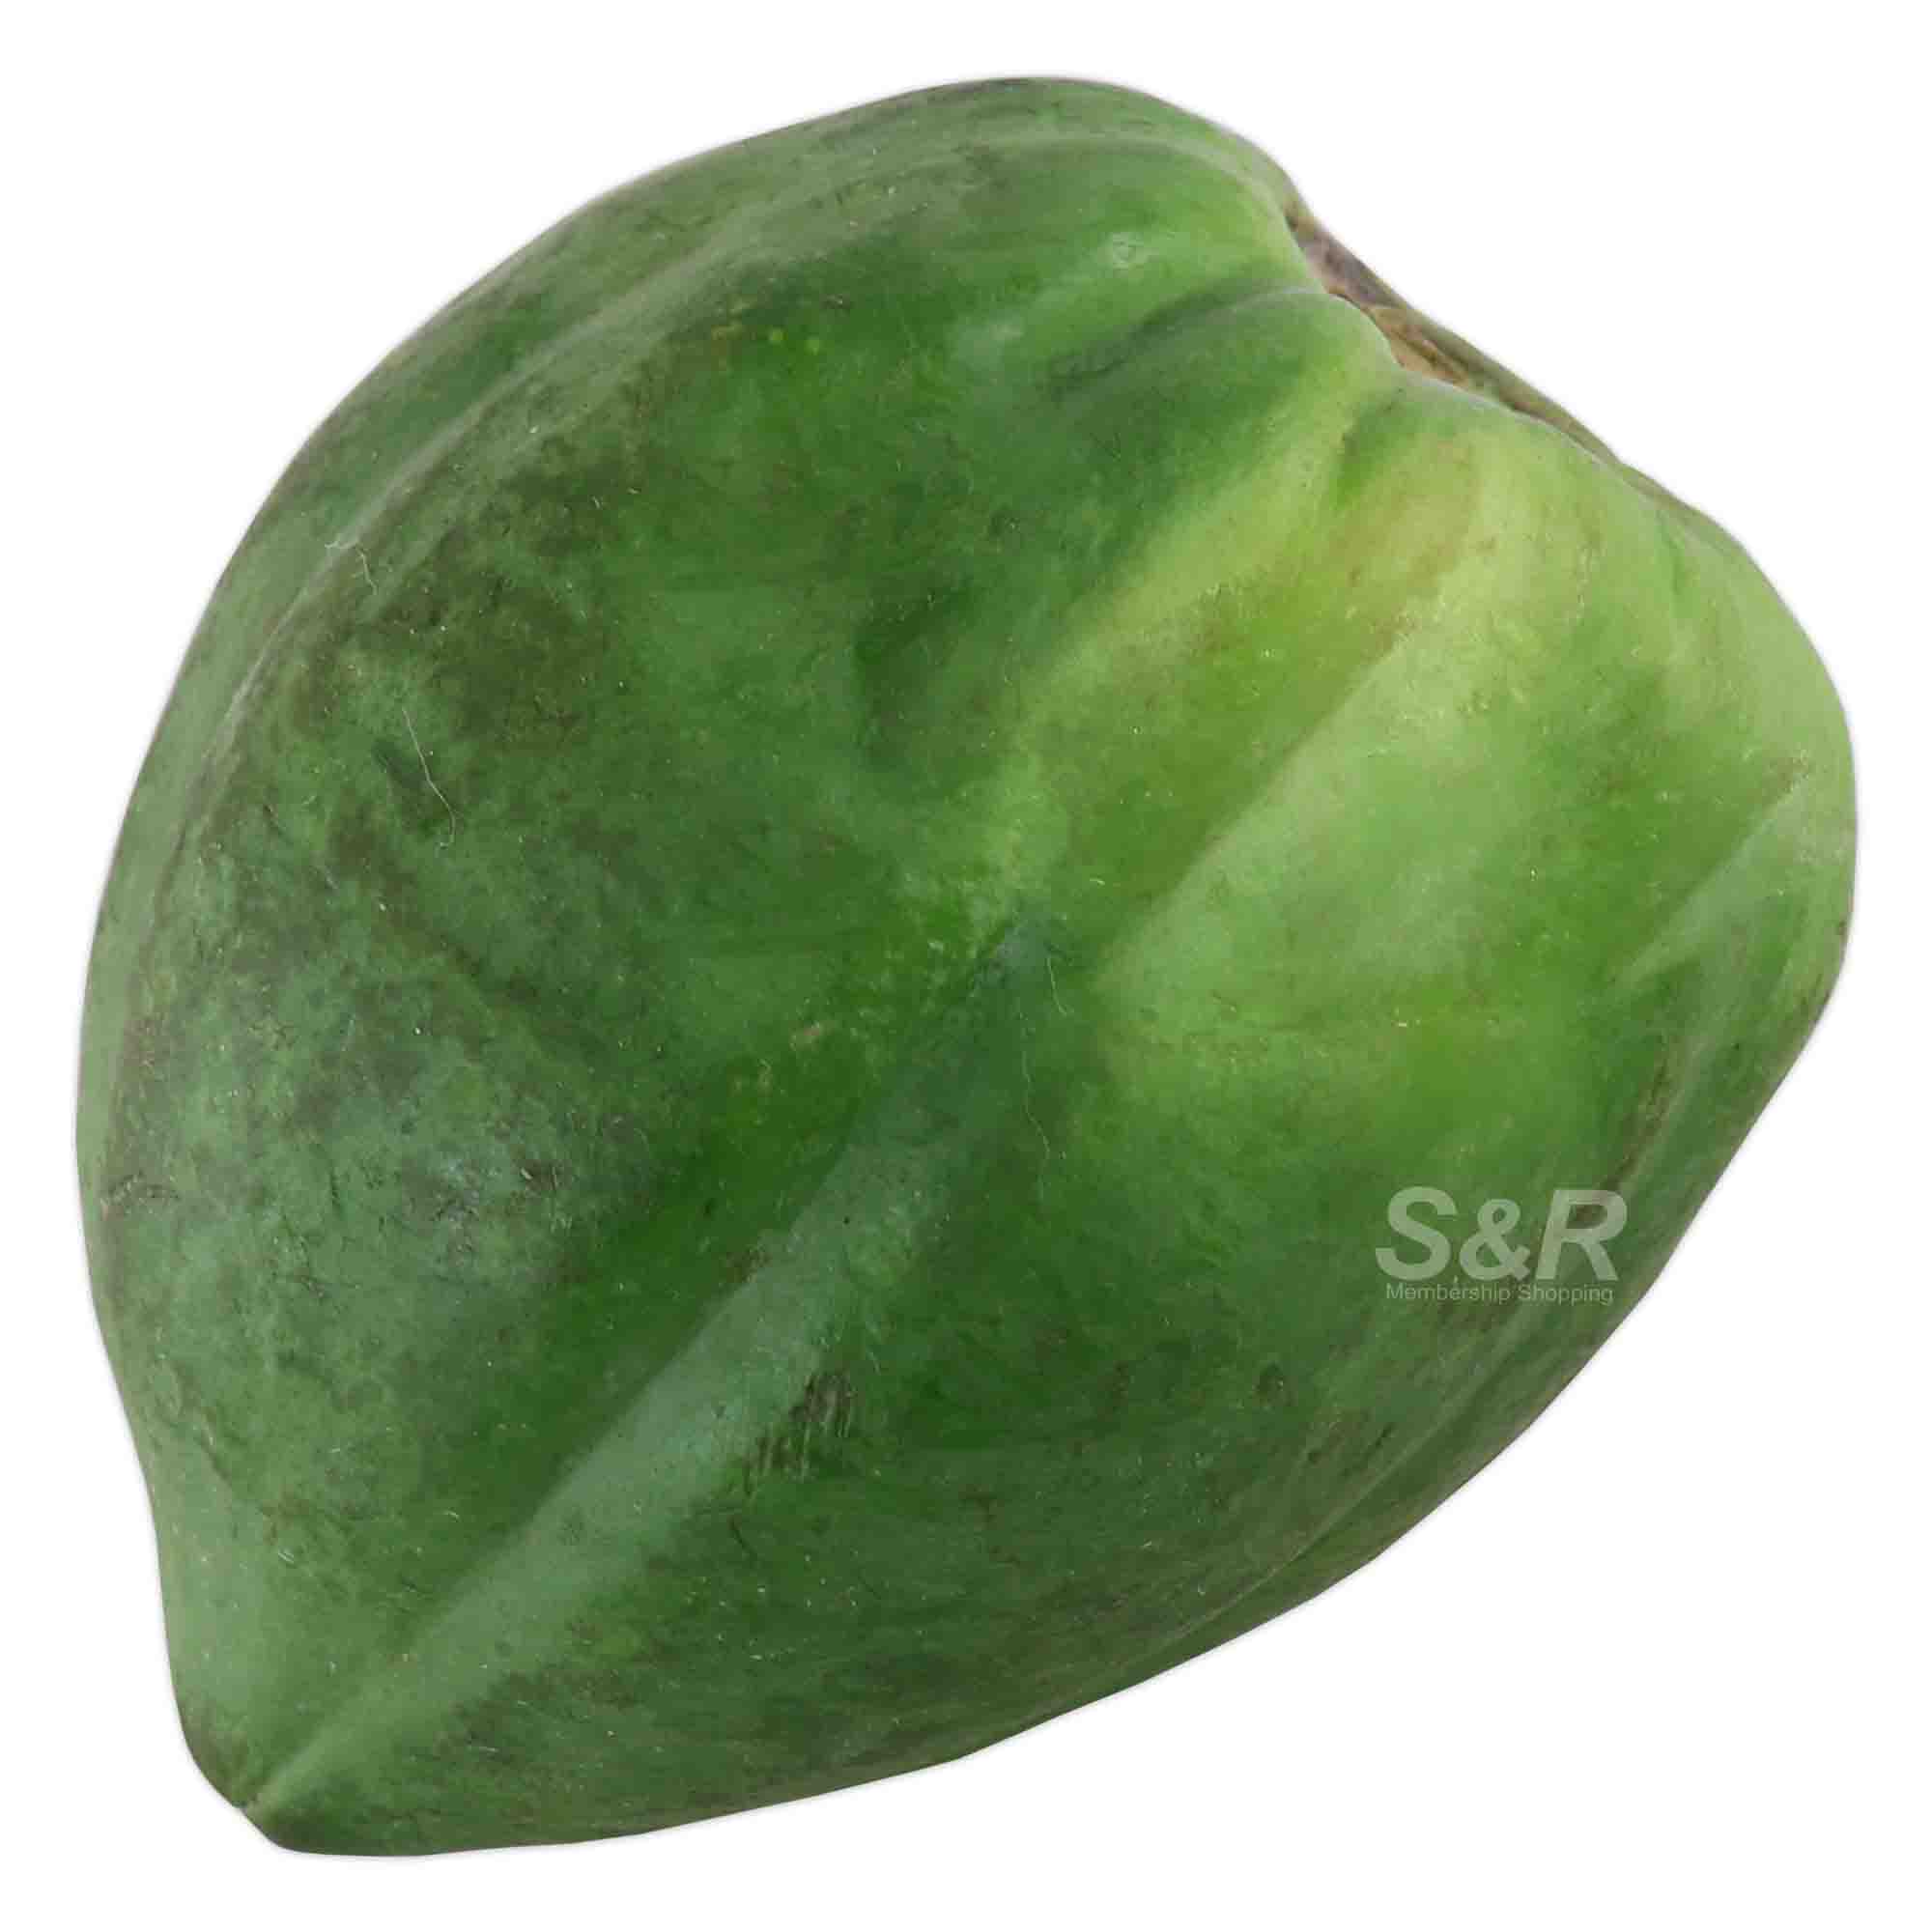 S&R Green Papaya approx. 1kg